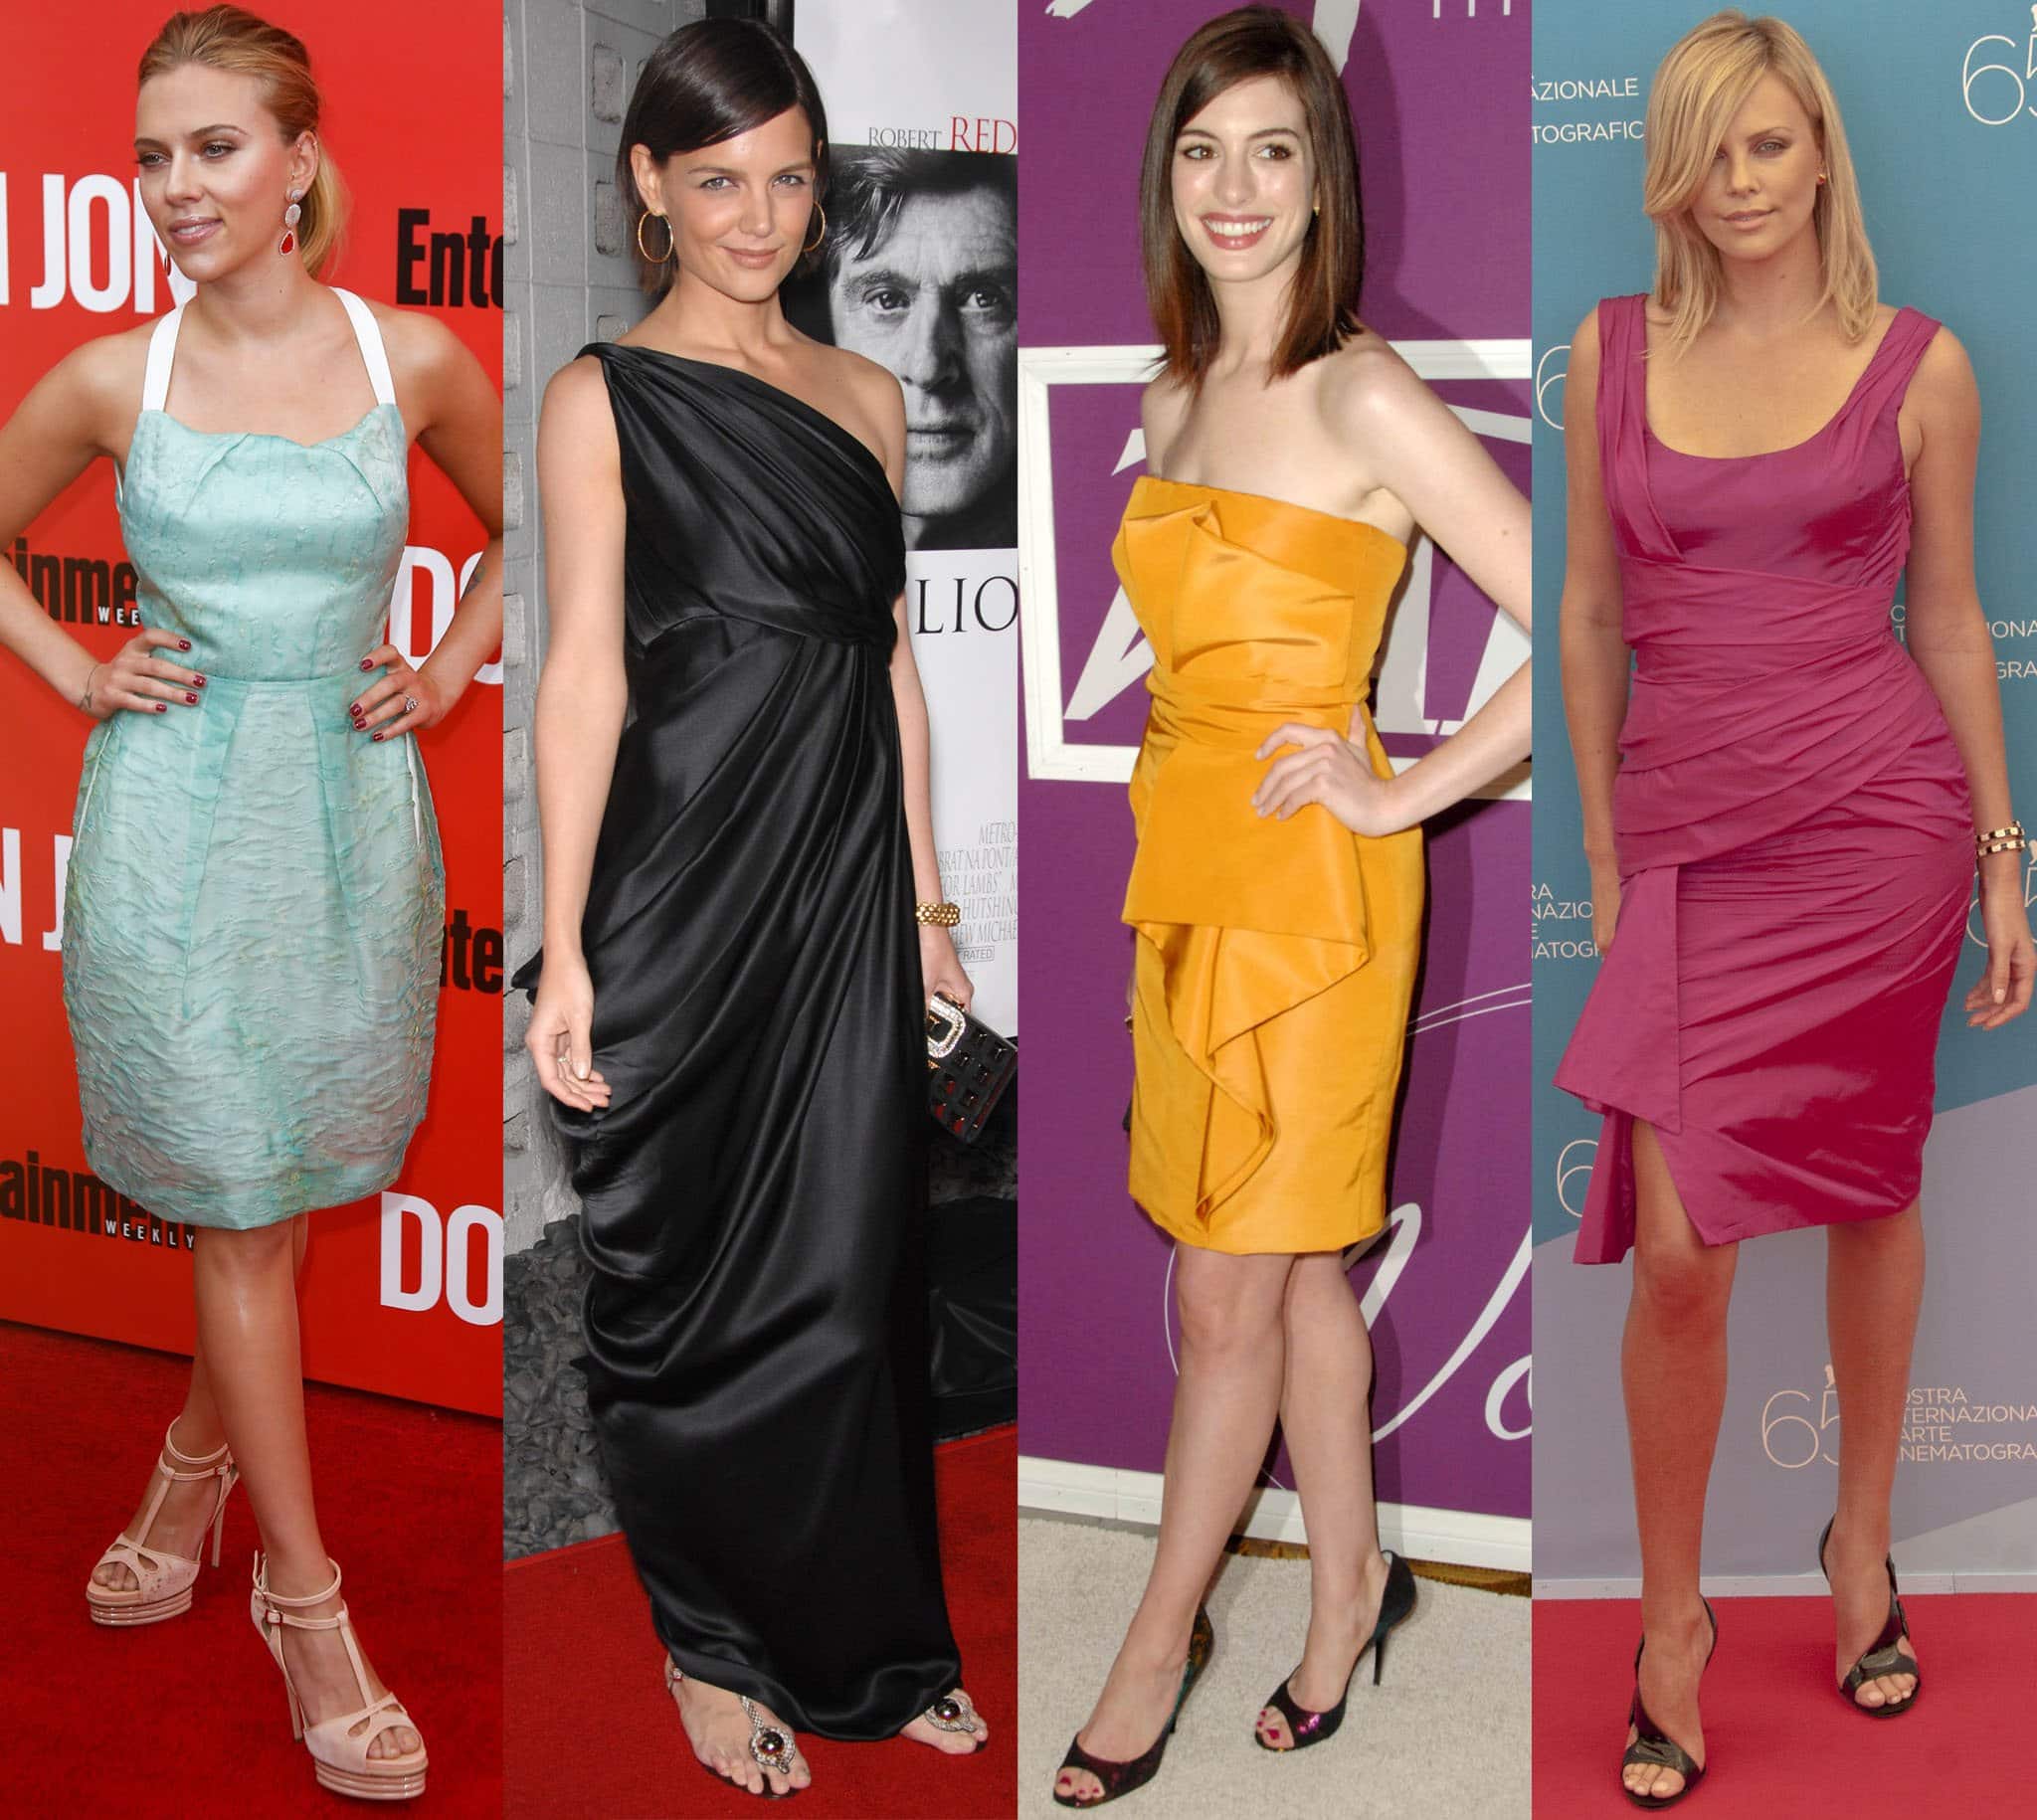 A-list stars Scarlett Johansson, Katie Holmes, Anne Hathaway, and Charlize Theron wearing Roger Vivier heels